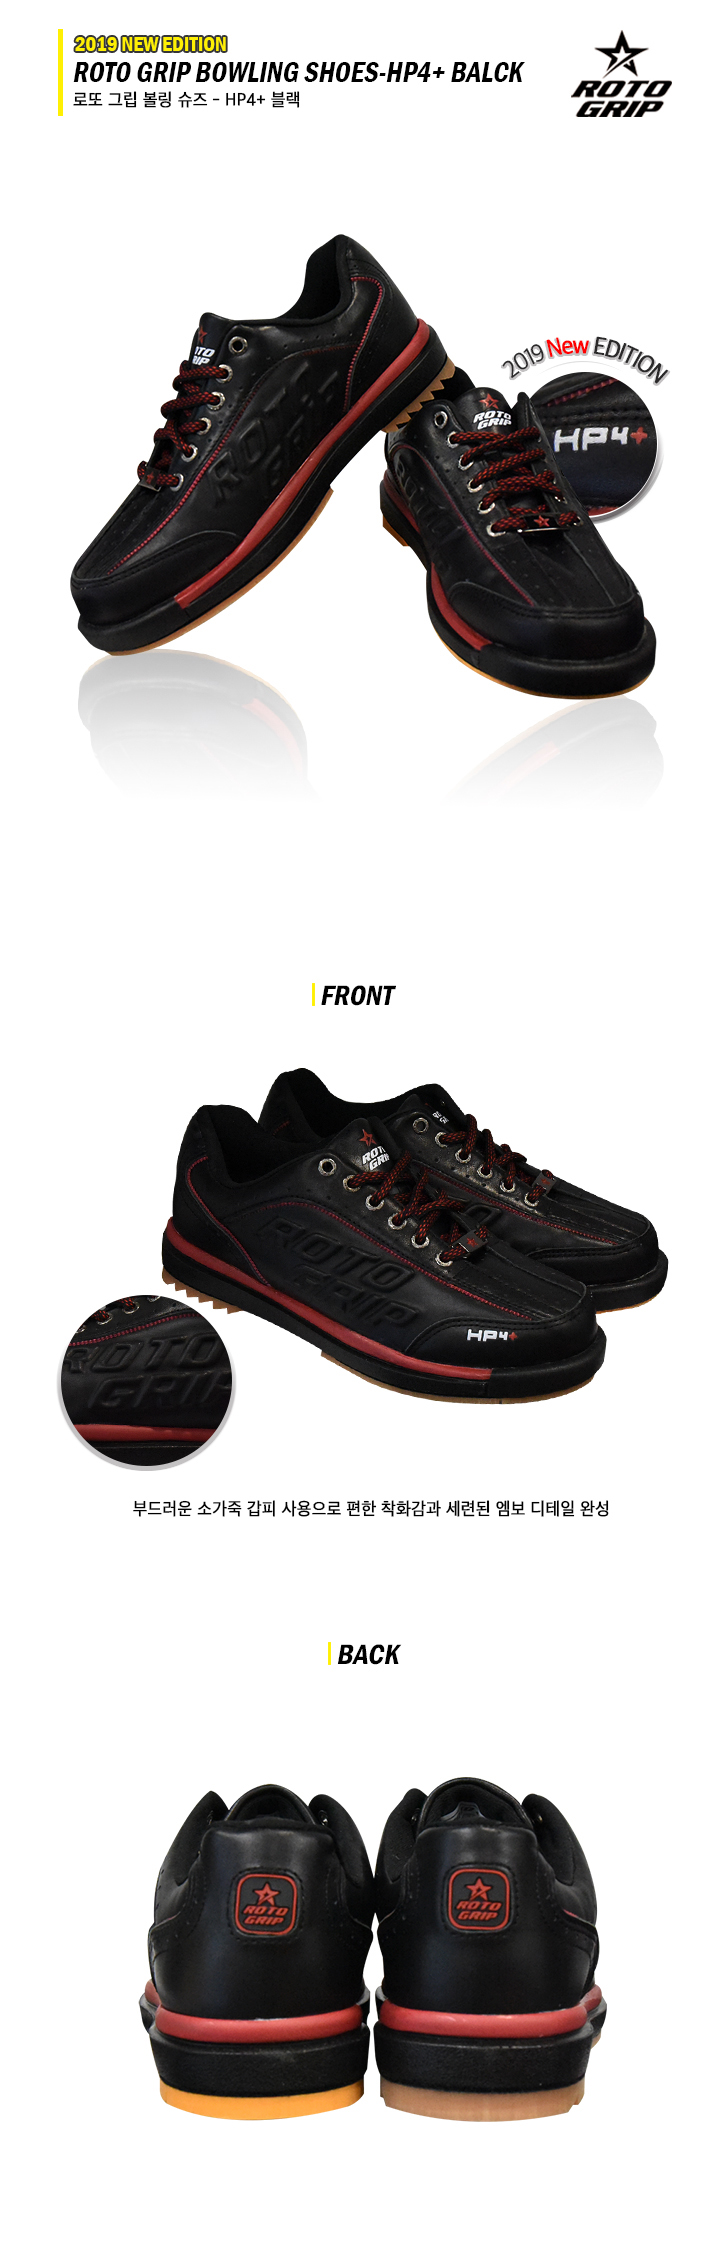 MAX/FW/Pro/K3/Pro/Bowling Shoes - 11STREET